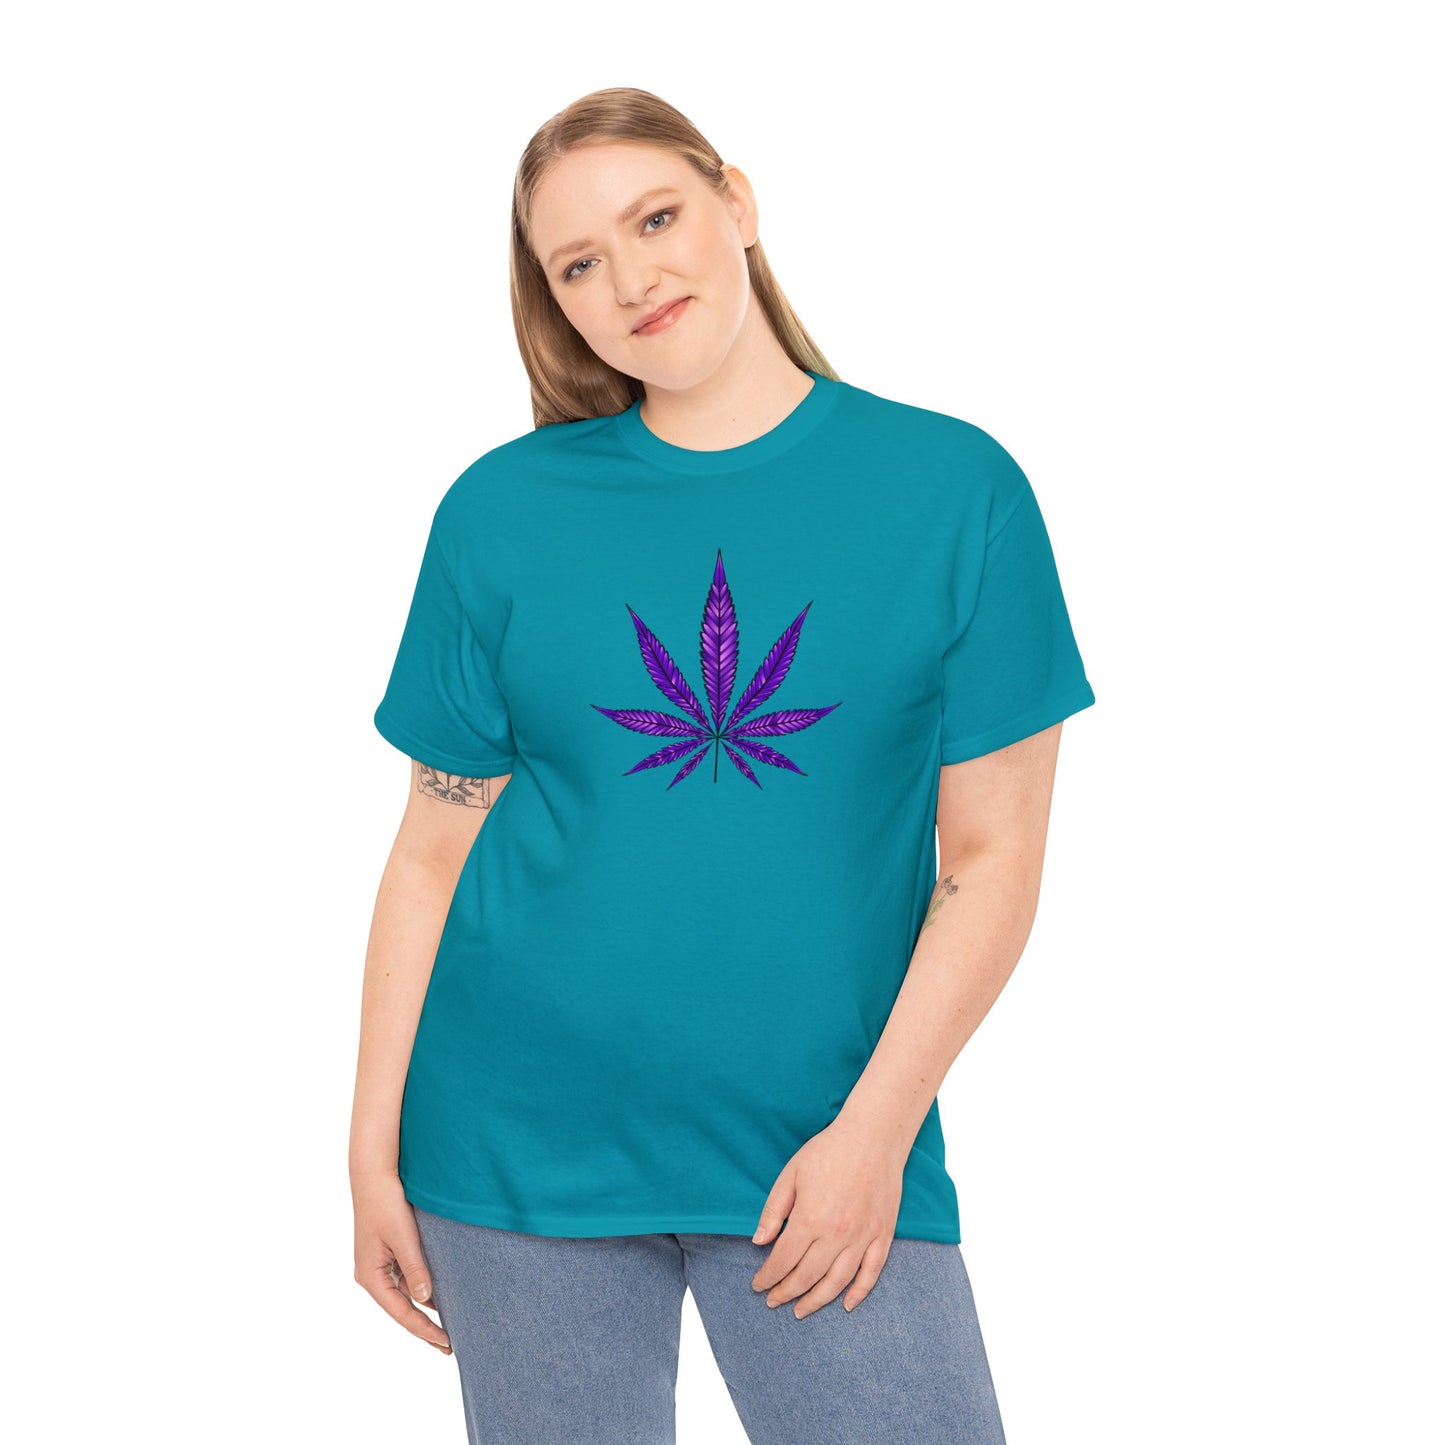 Woman wearing a Purple Cannabis Leaf Tee, reflecting marijuana culture.